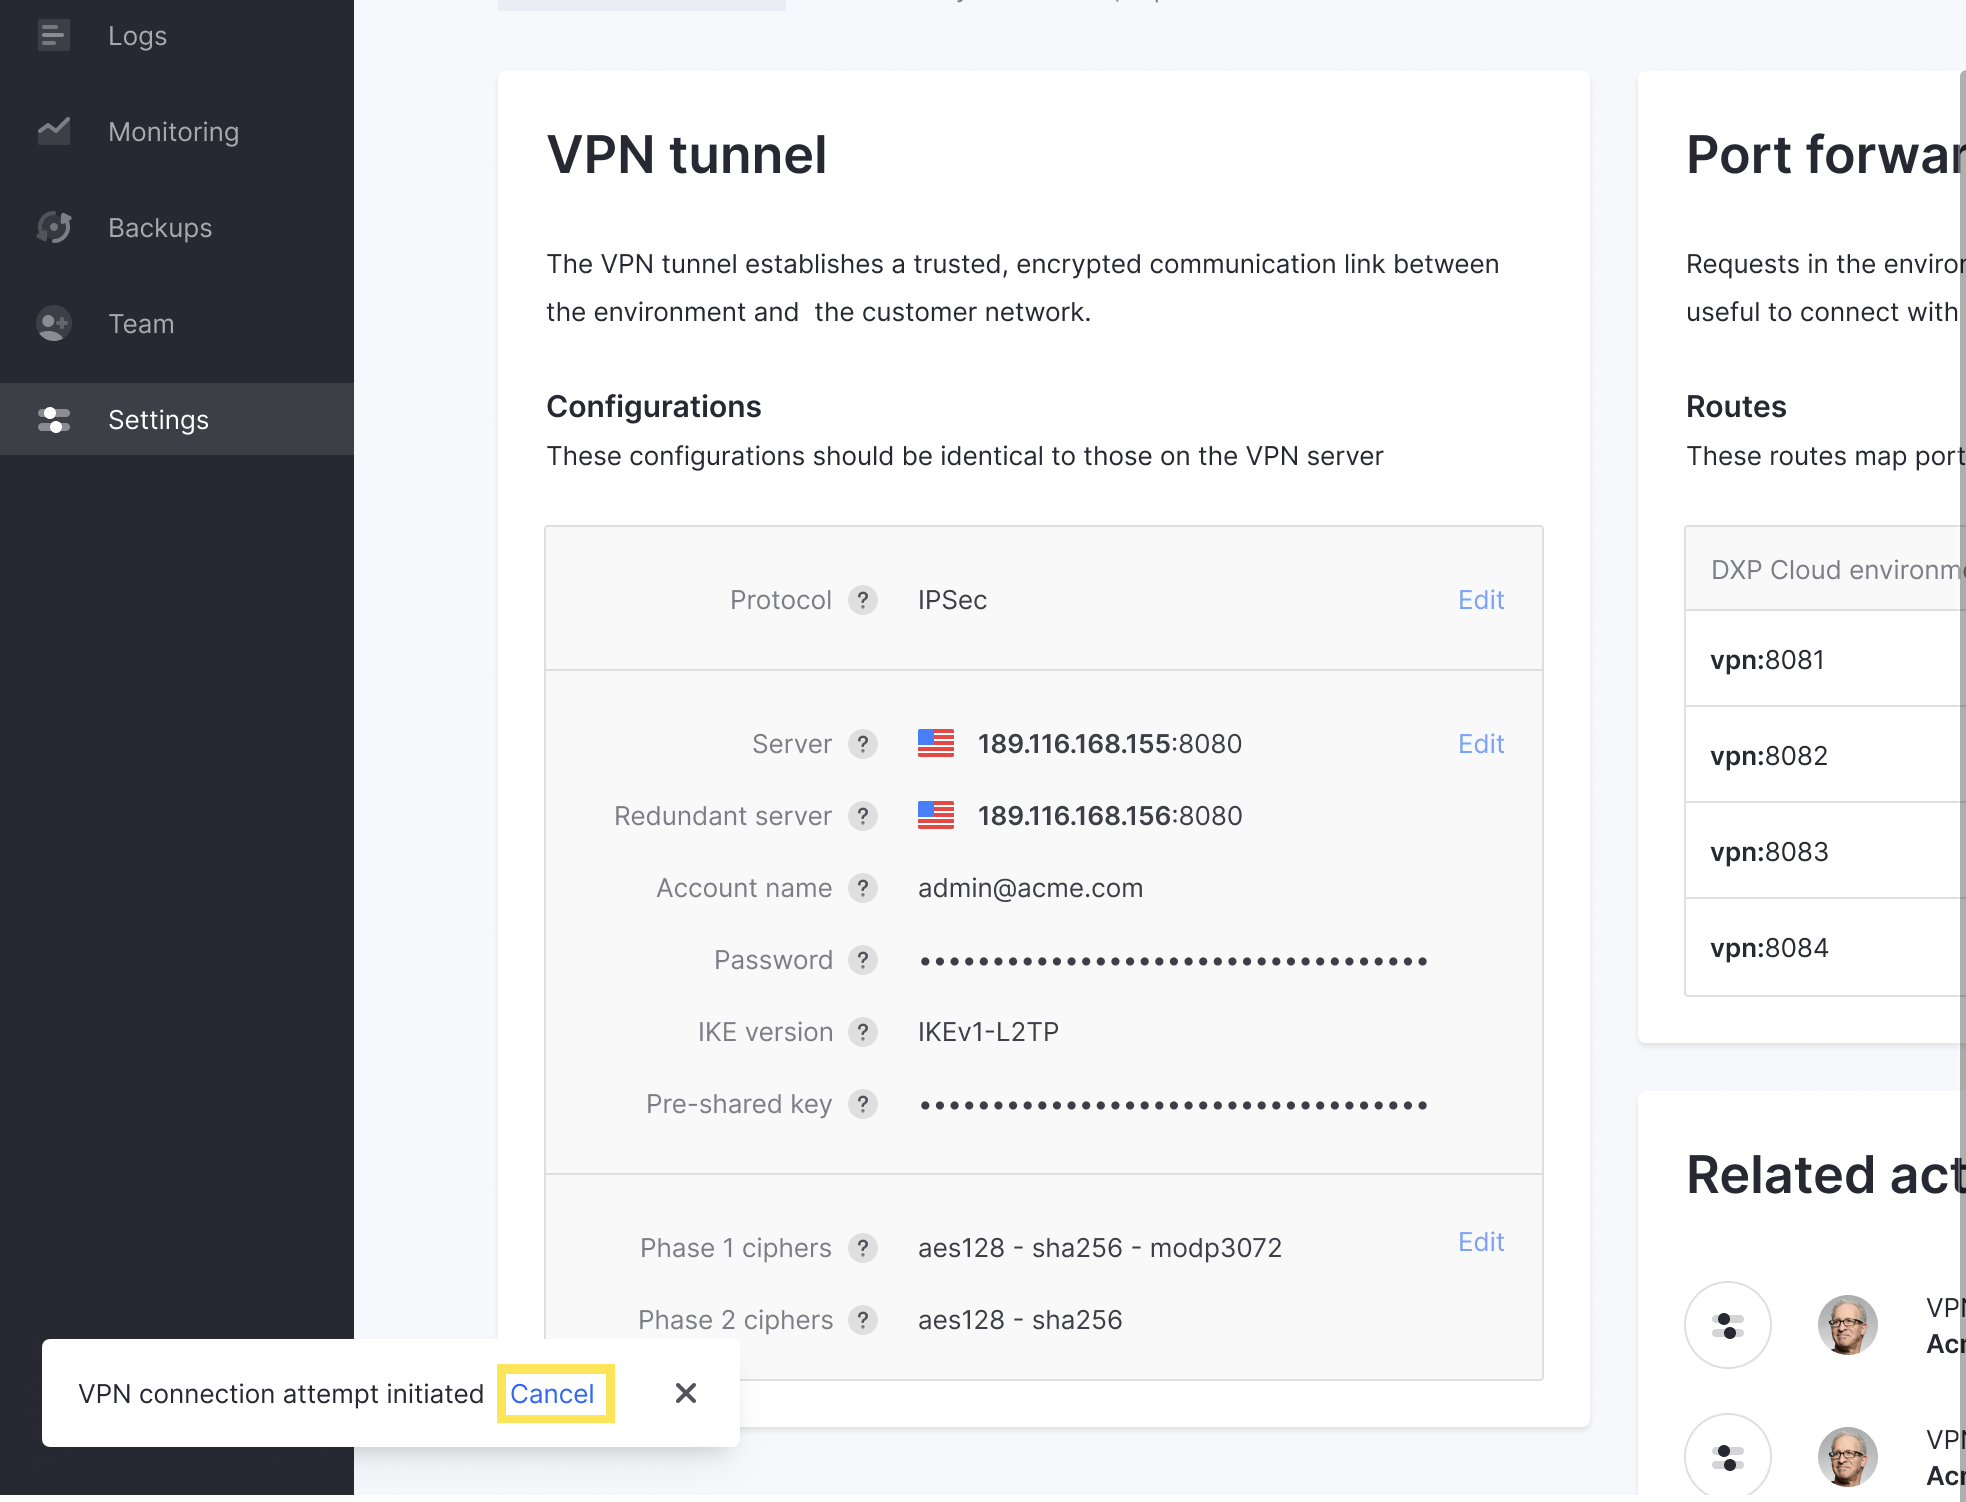 「VPNの切断」ページでは、先に進む前に切断の影響を確認するよう求められます。